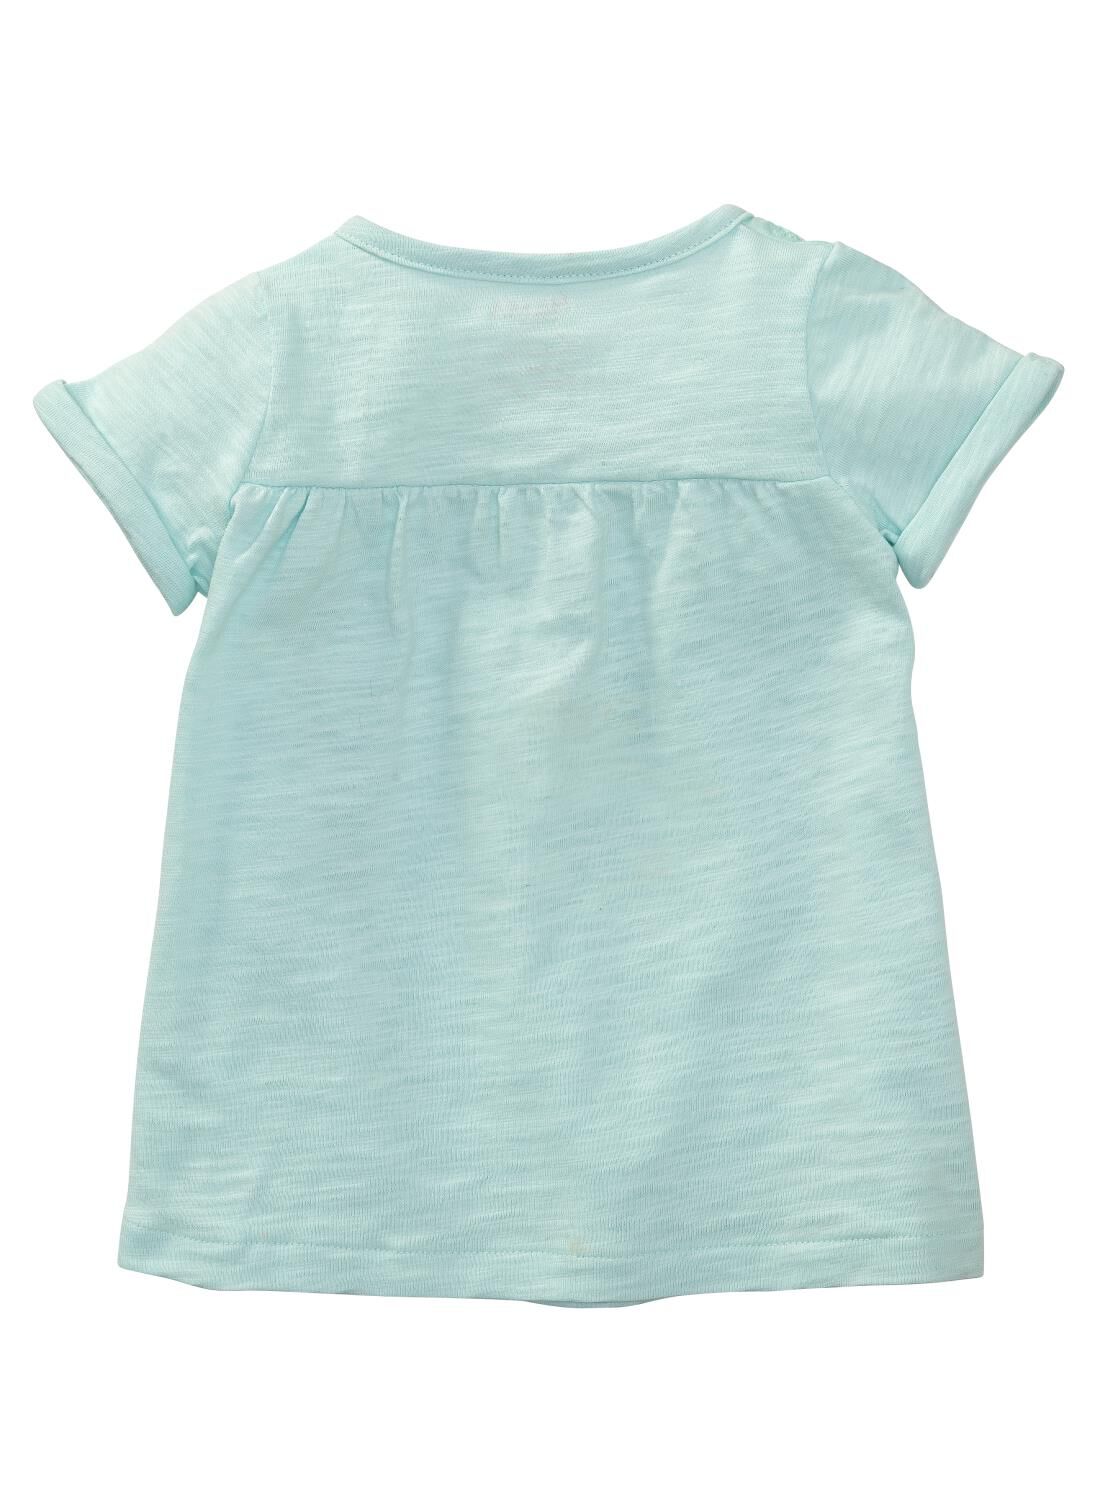 Baby Meisjes T-shirt Aqua (aqua)